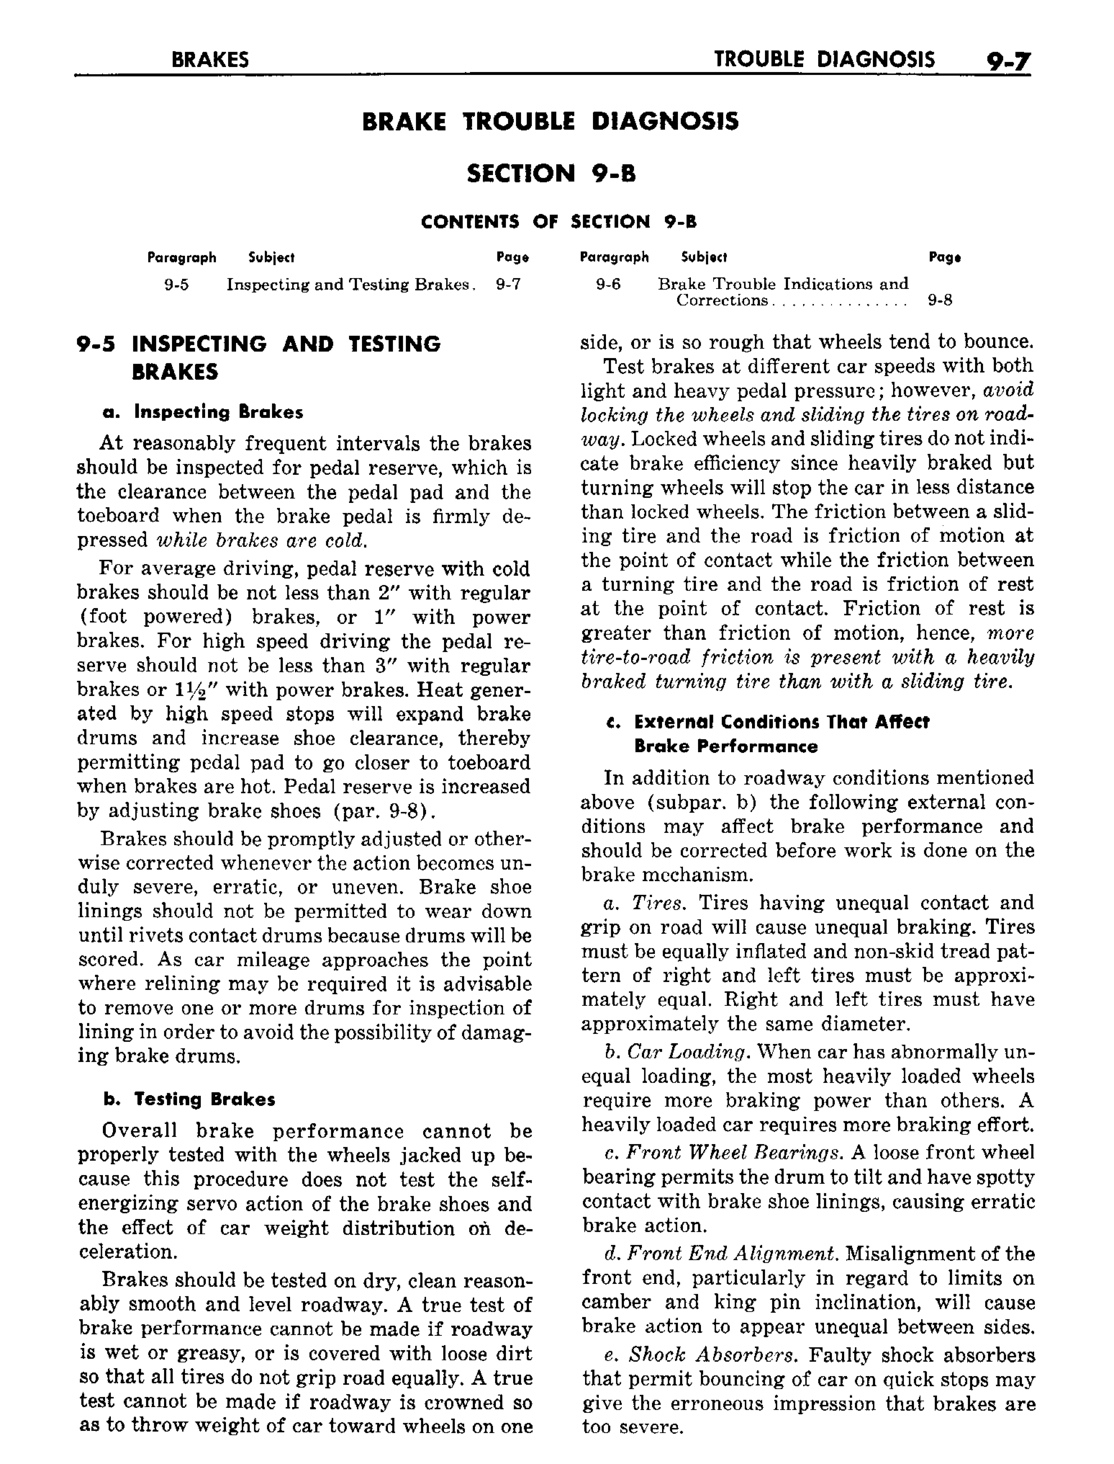 n_10 1960 Buick Shop Manual - Brakes-007-007.jpg